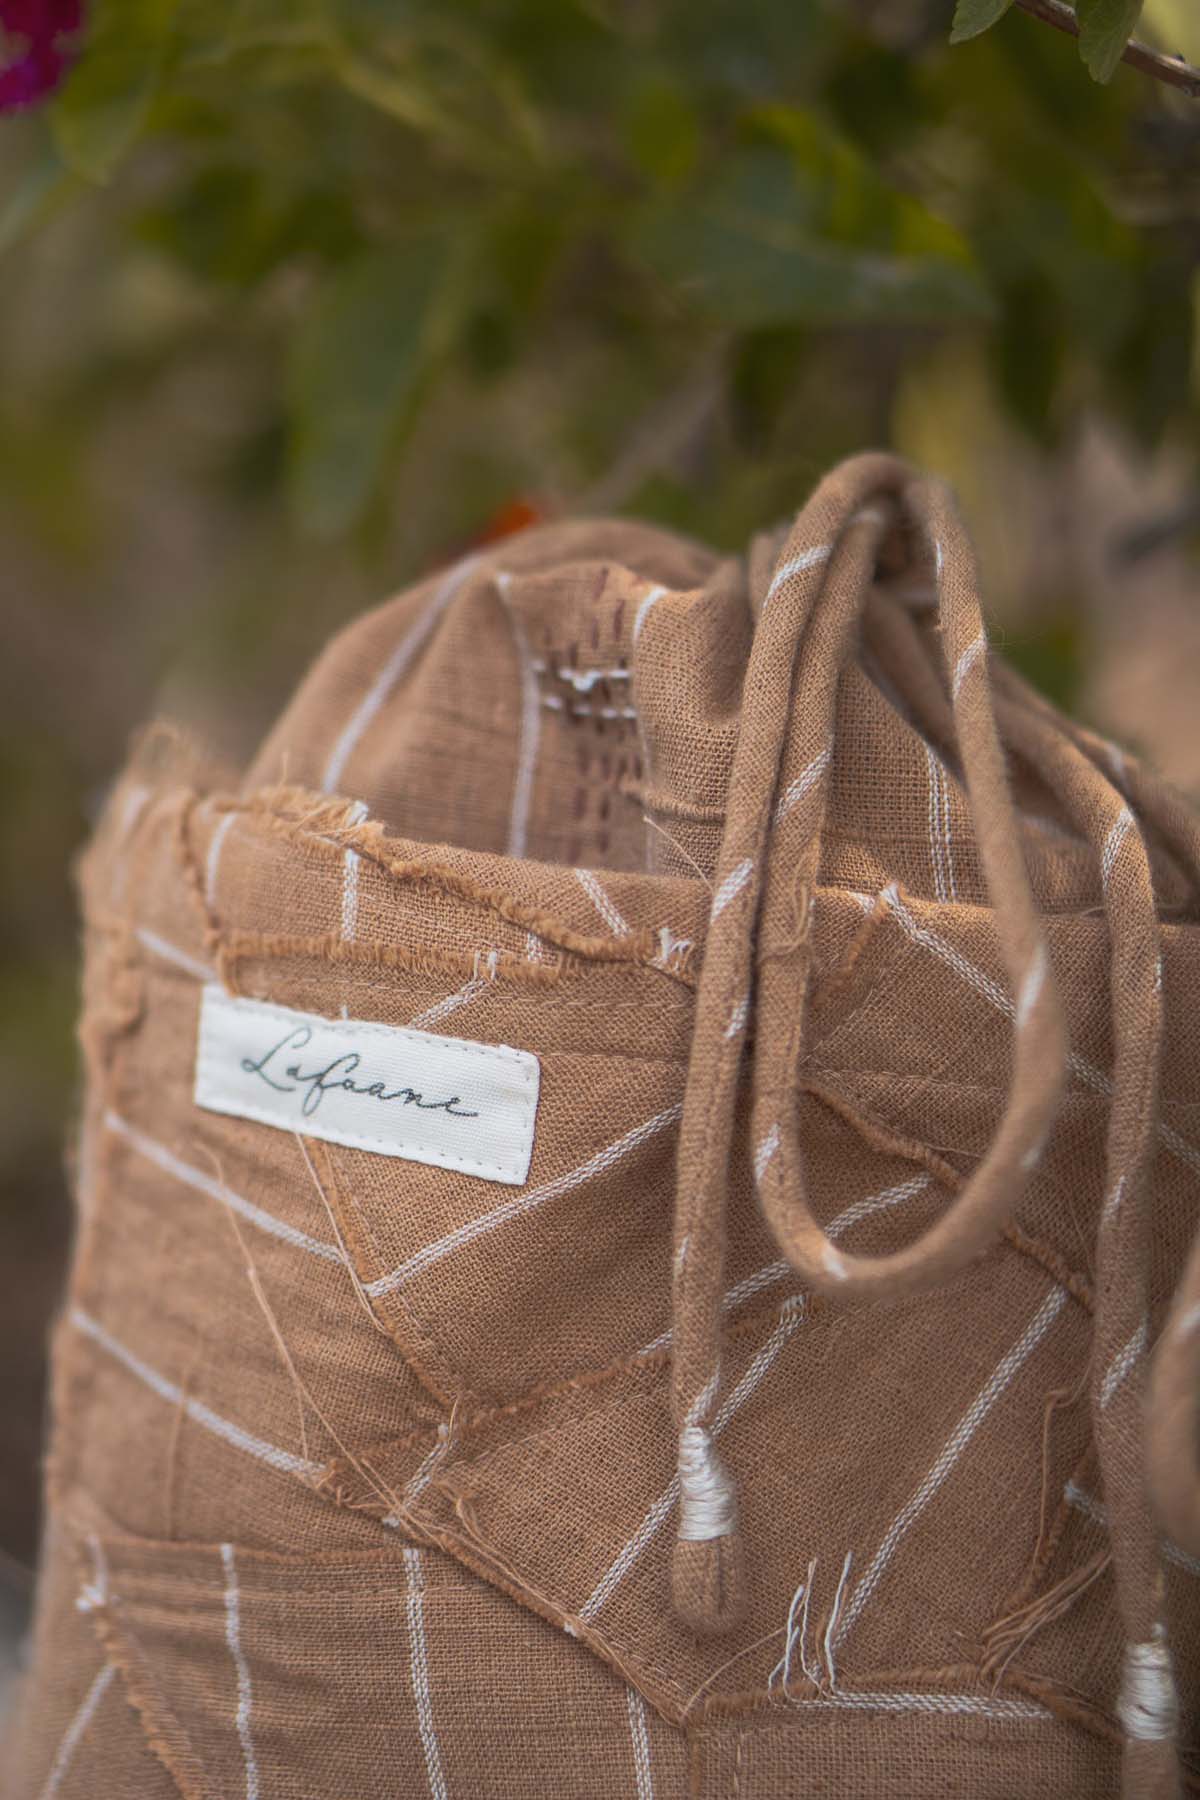 Embroidered Drawstring Bag